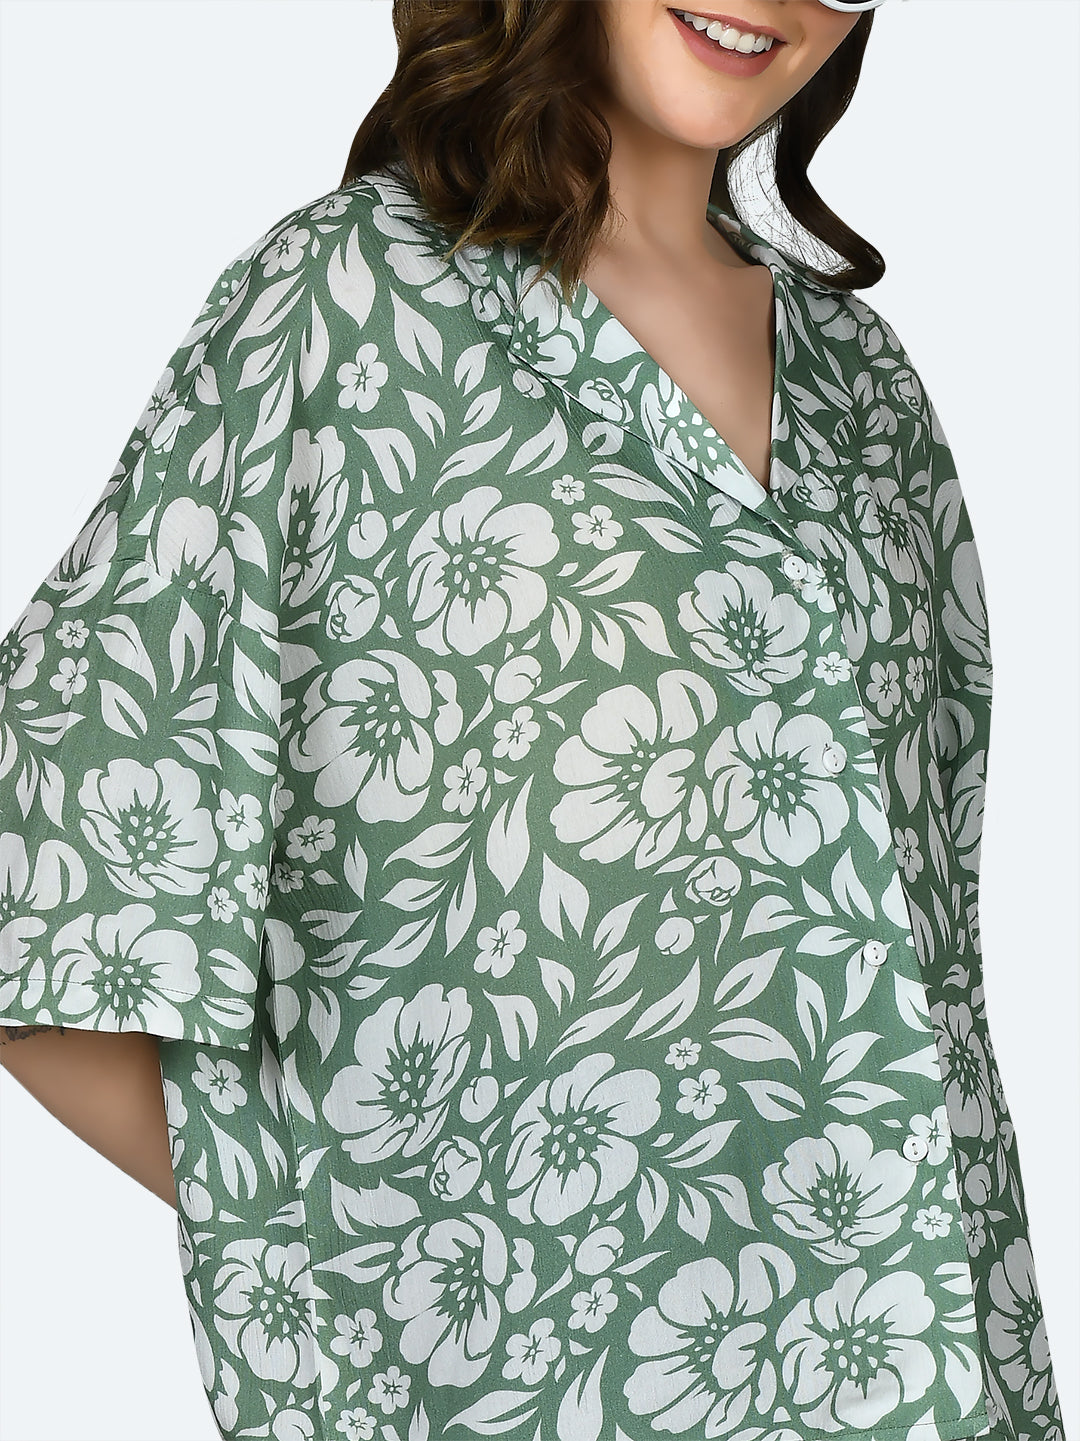 Green Printed Oversized Shirt For Women